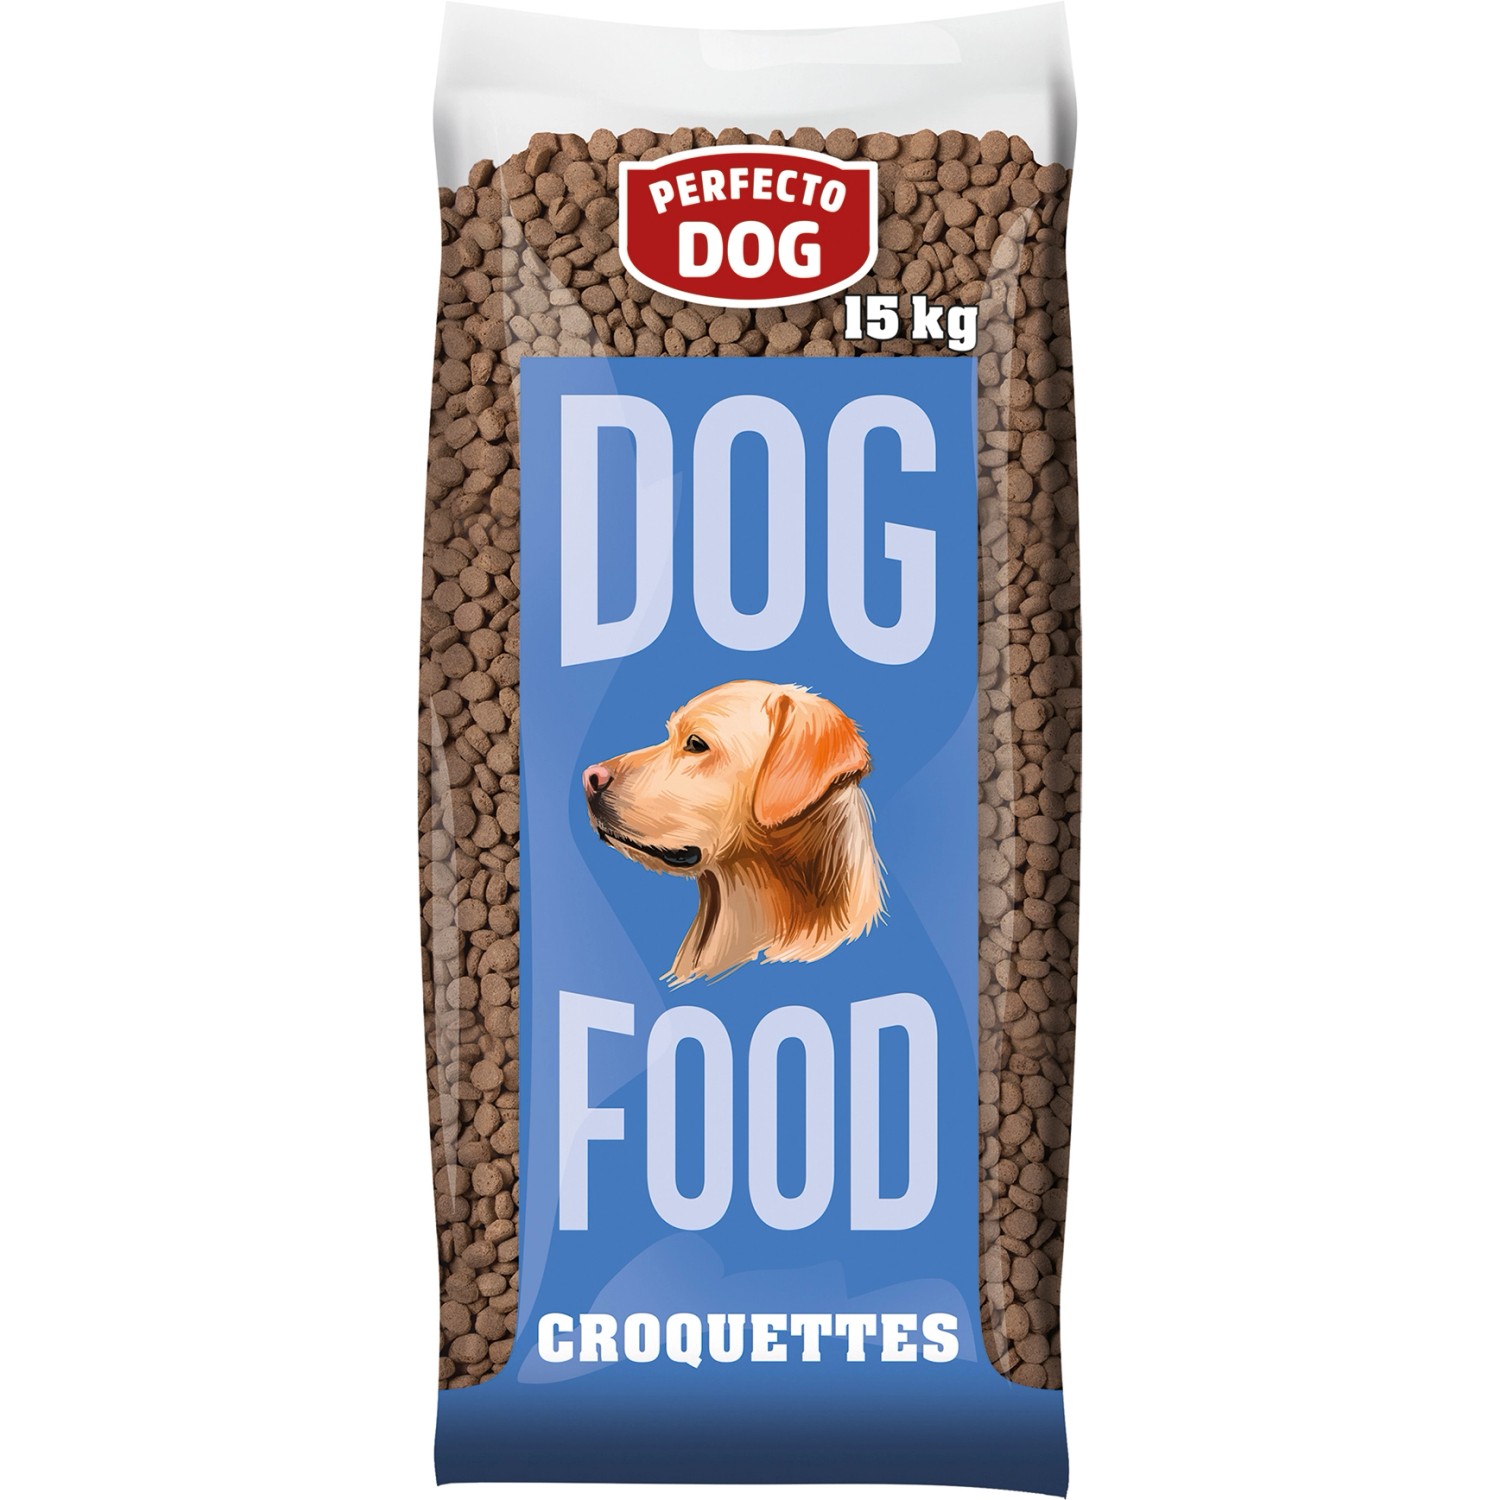 Perfecto Dog Hunde-Trockenfutter Croquettes 15 kg